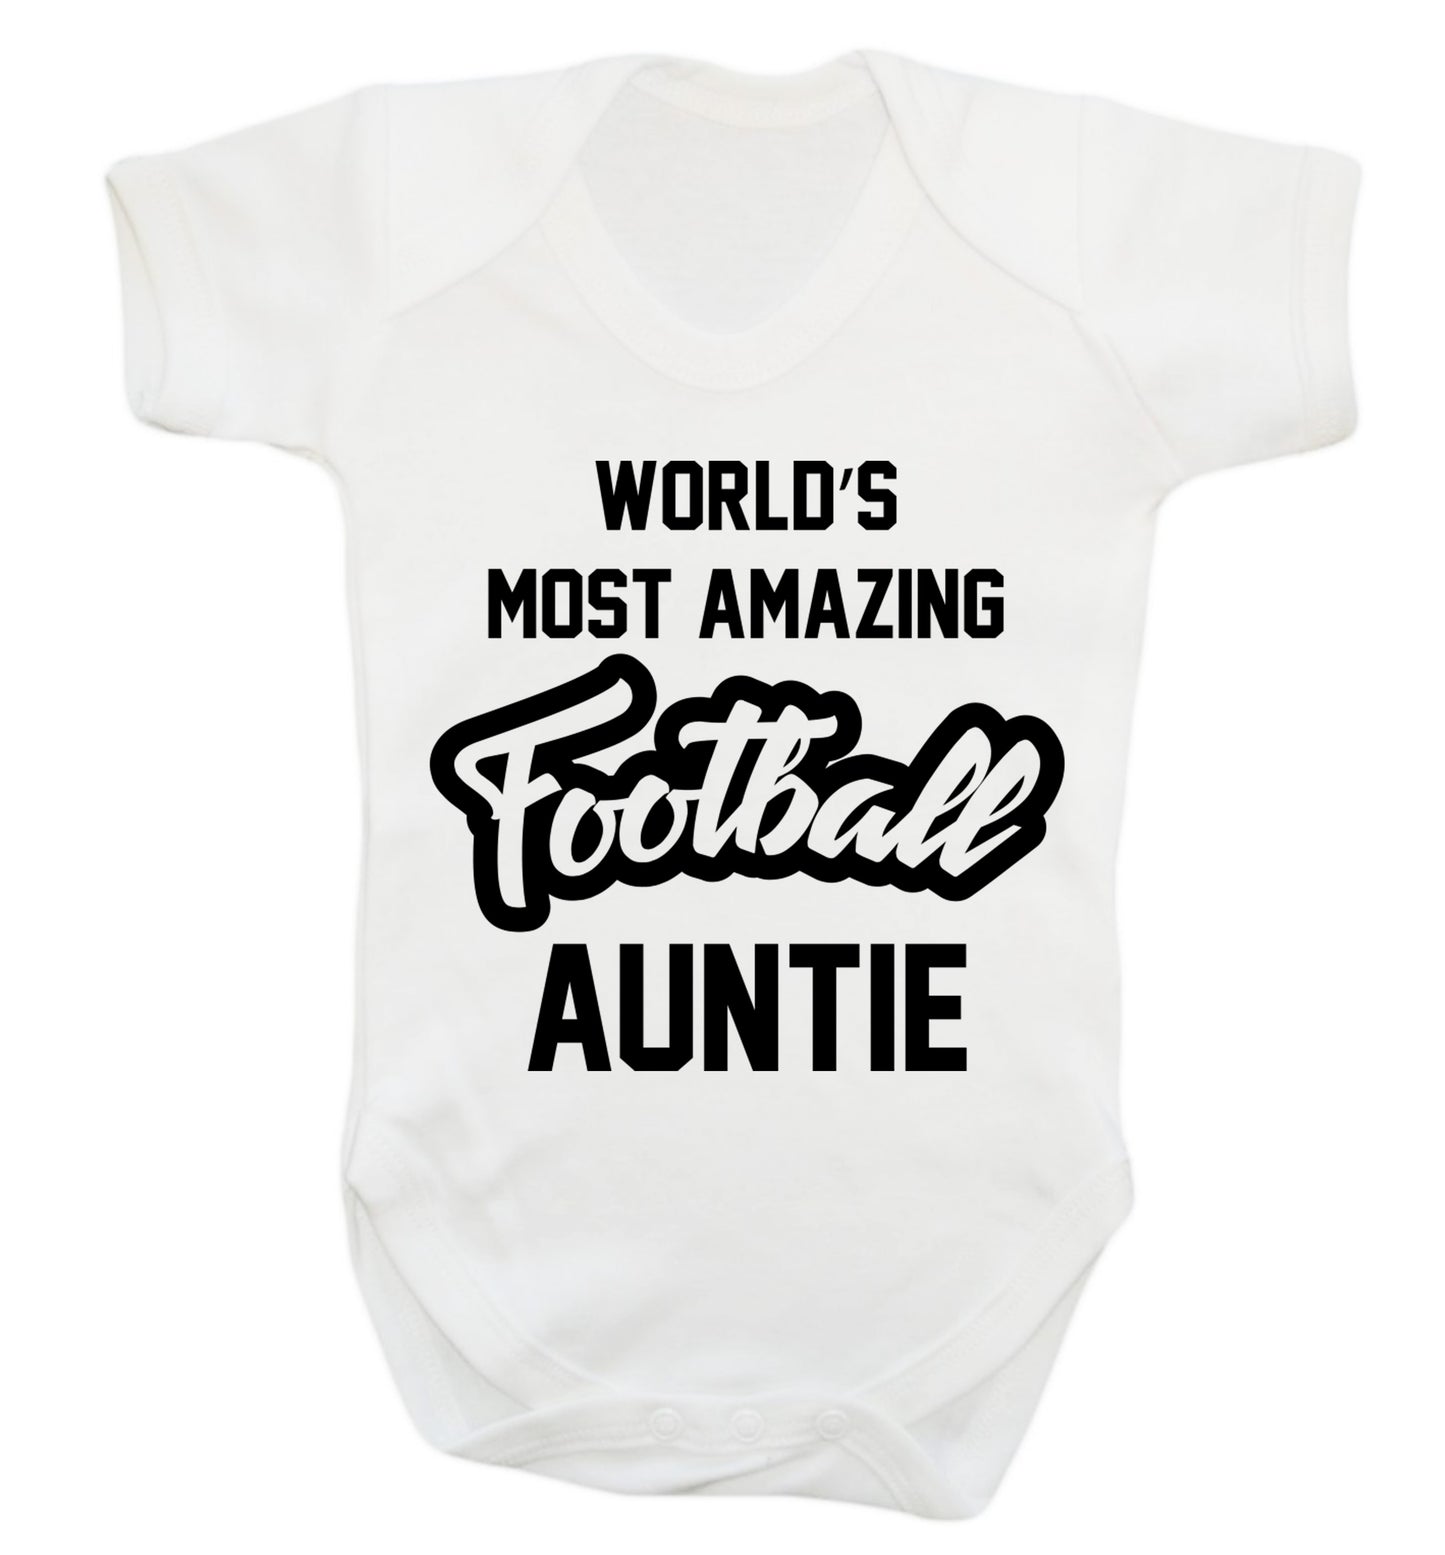 Worlds most amazing football auntie Baby Vest white 18-24 months